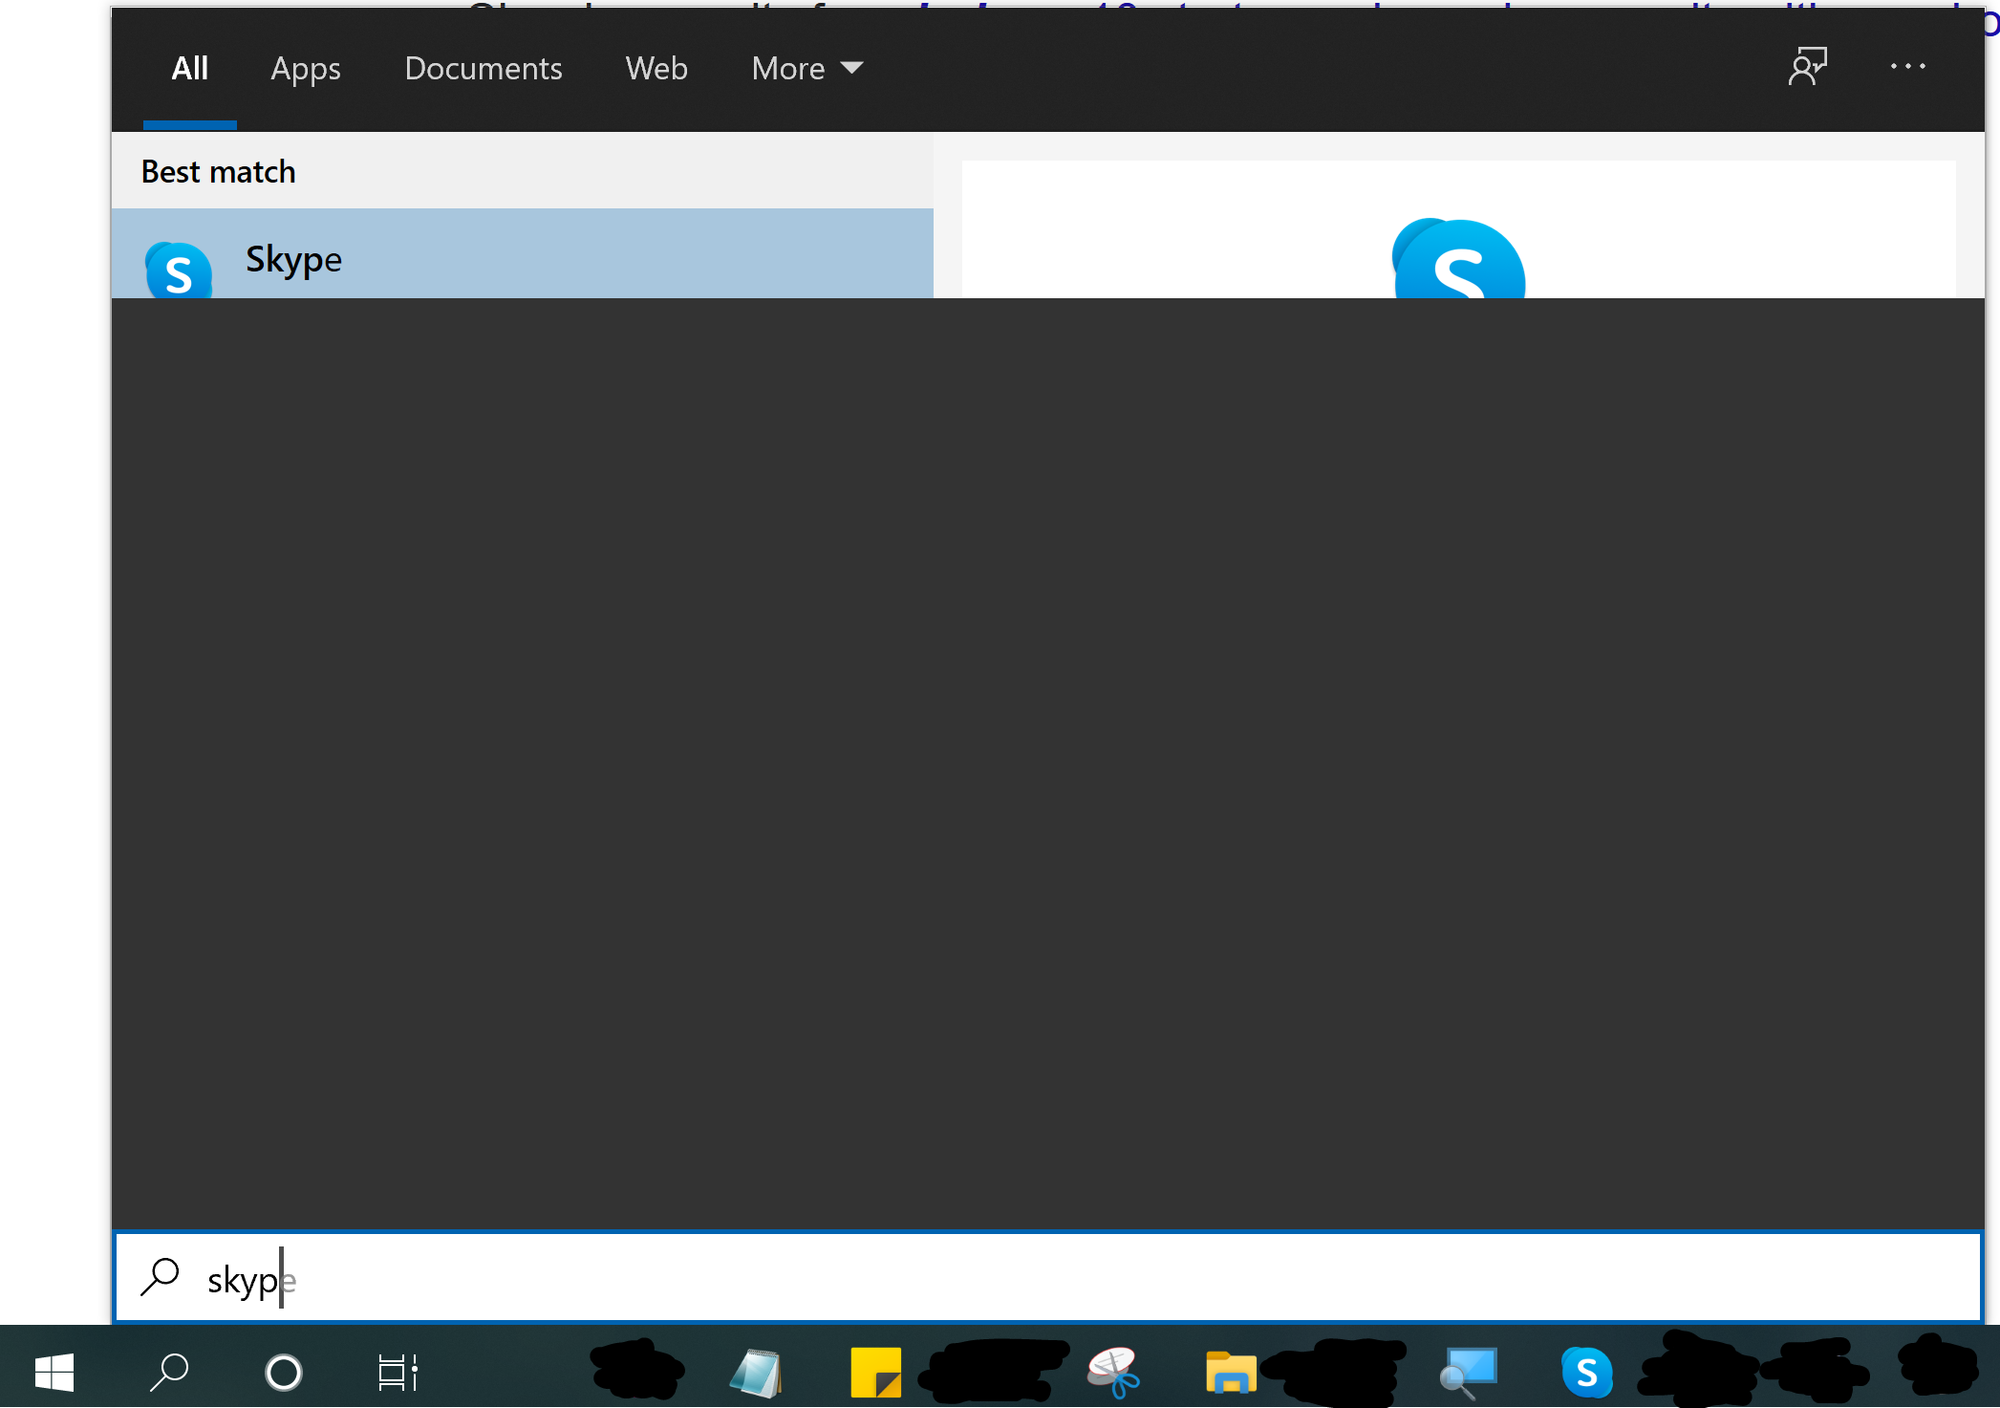 New windowsupdates, now start-search got broken! cabced98-9dbf-4ce4-83a2-bbbff1b77ddb?upload=true.png